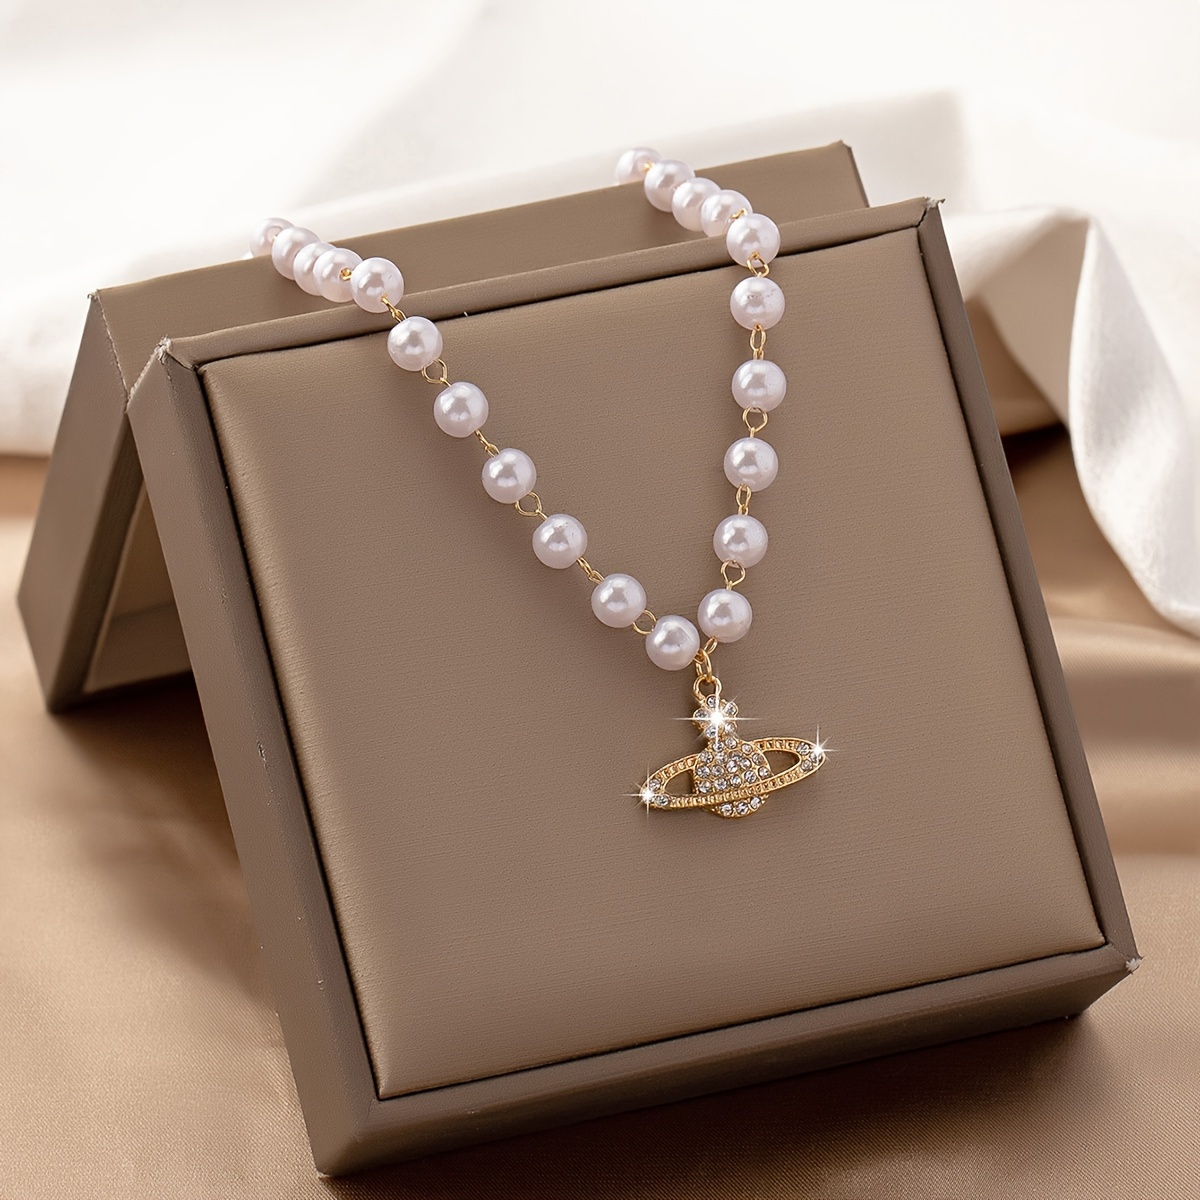 

Luxury Imitation Pearl Planet Rhinestones Necklace Women's Delicate Neck Jewelry Ornament Gift